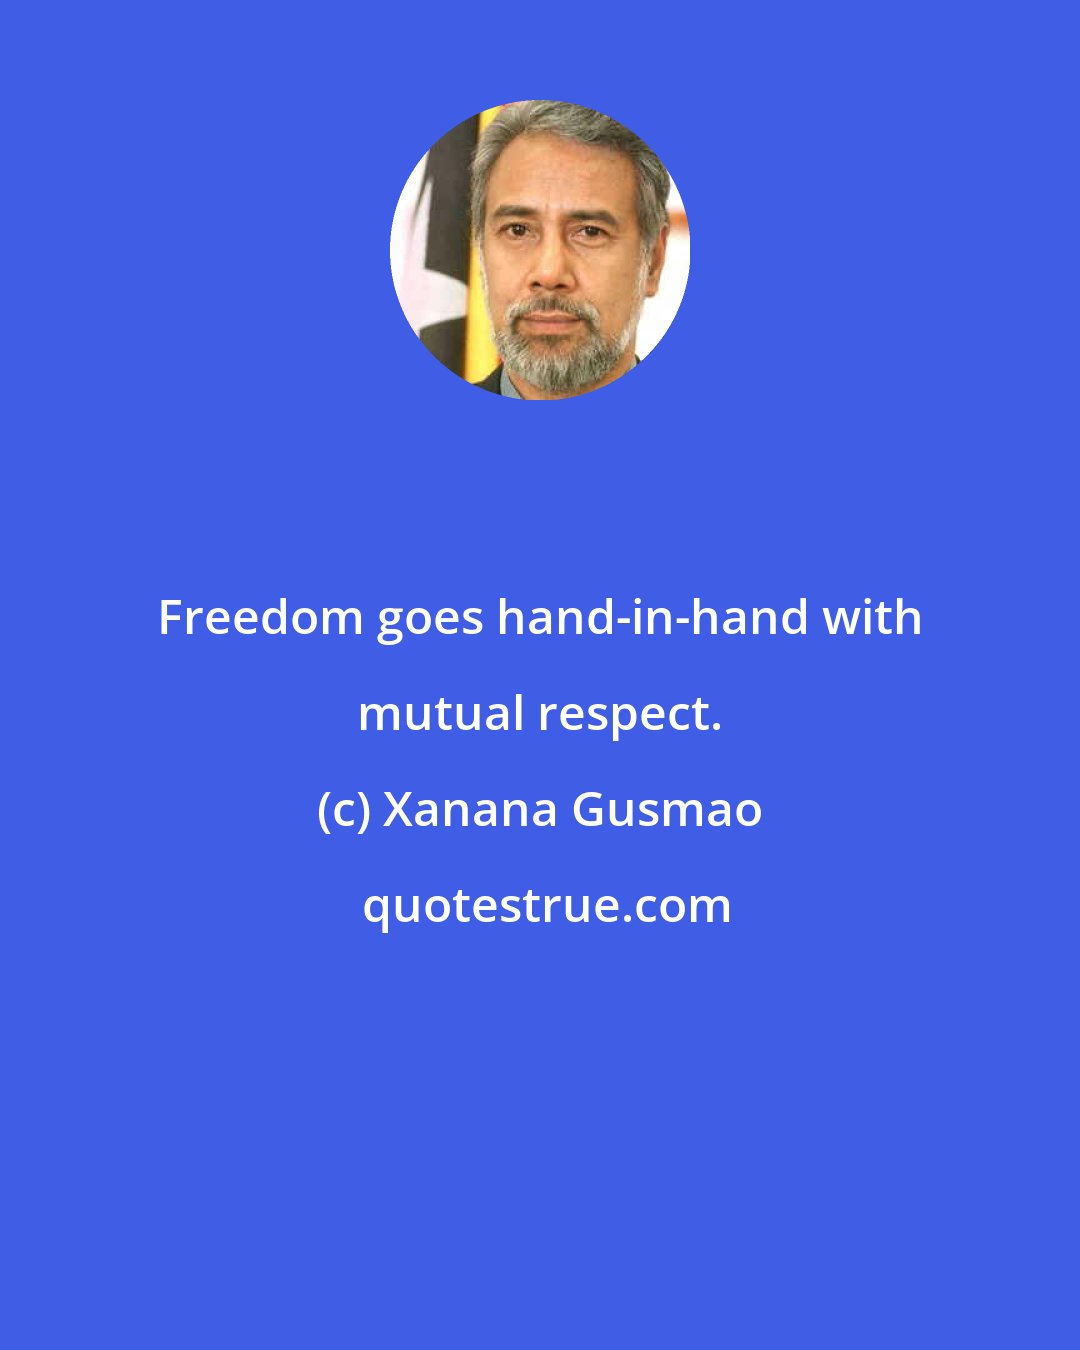 Xanana Gusmao: Freedom goes hand-in-hand with mutual respect.